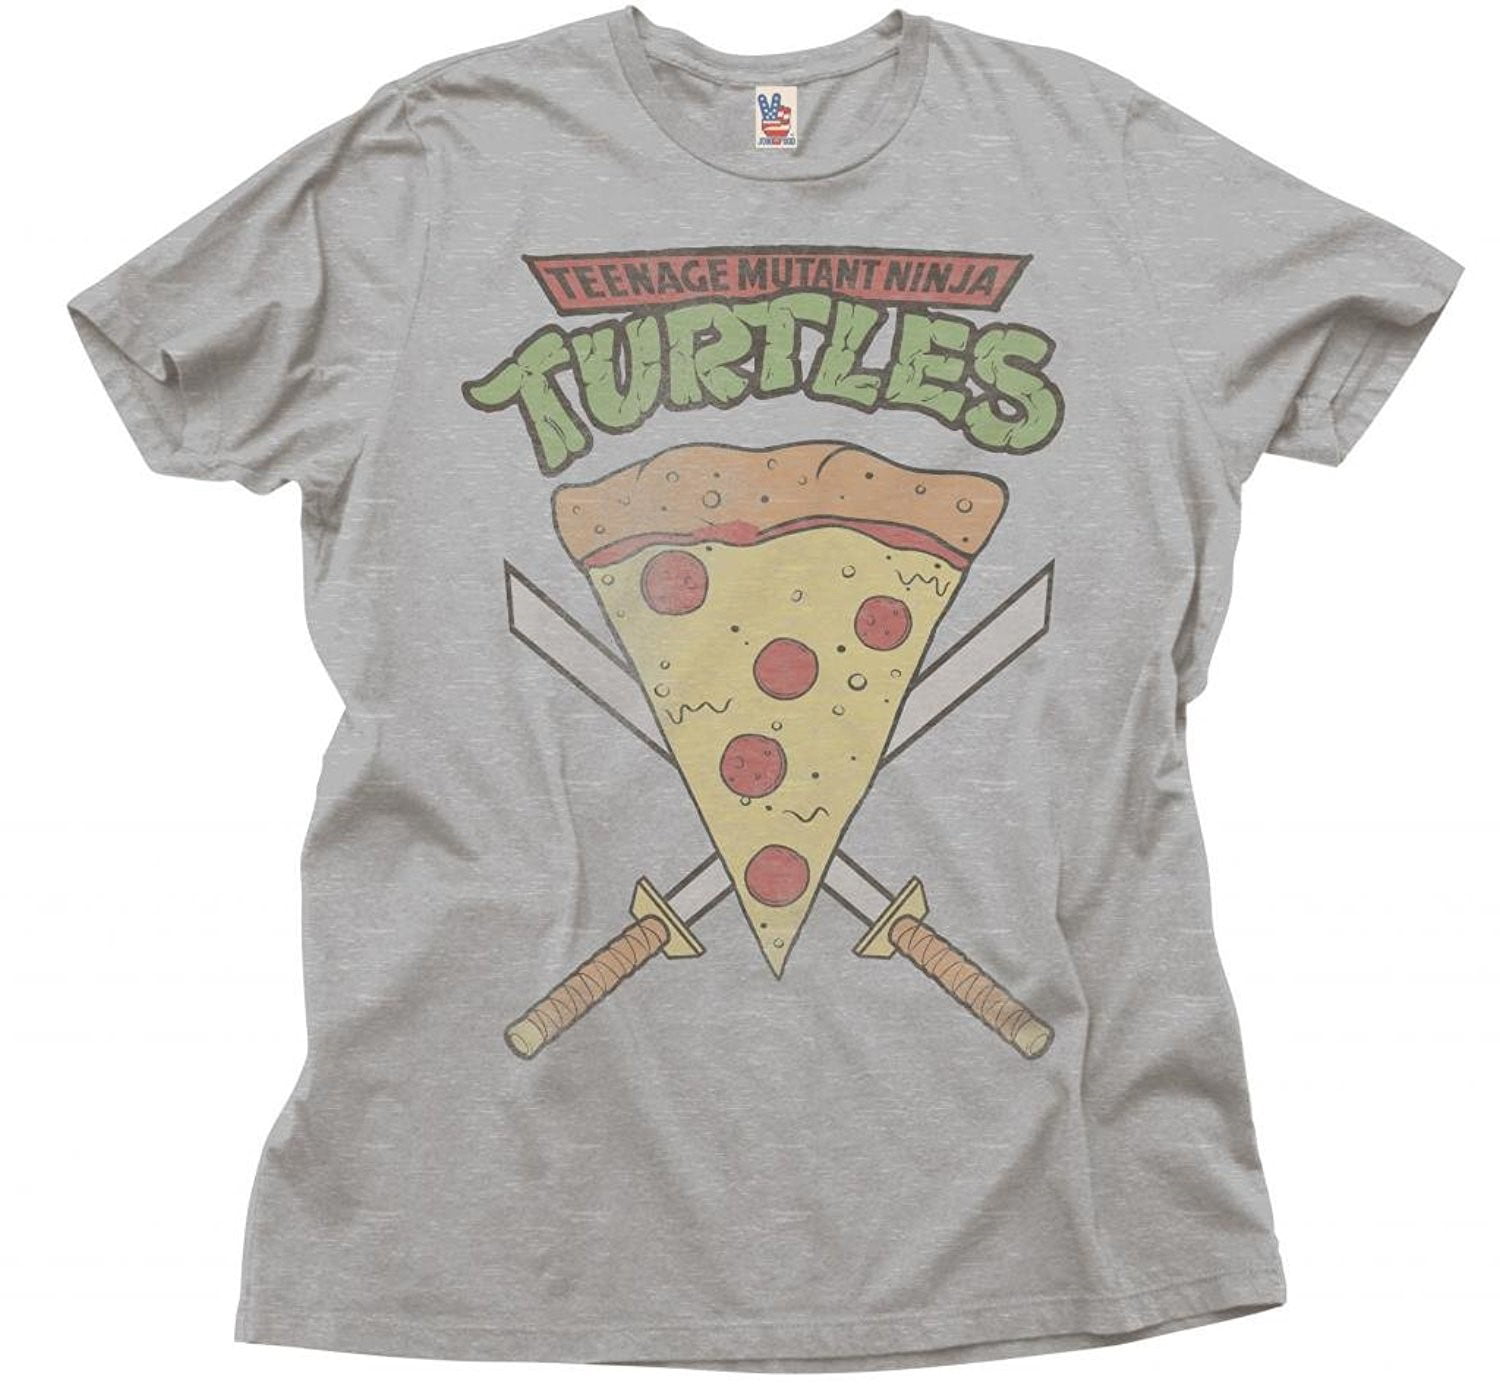 Teenage Mutant Ninja Turtles by The Slice Unisex T-Shirt - White - XL